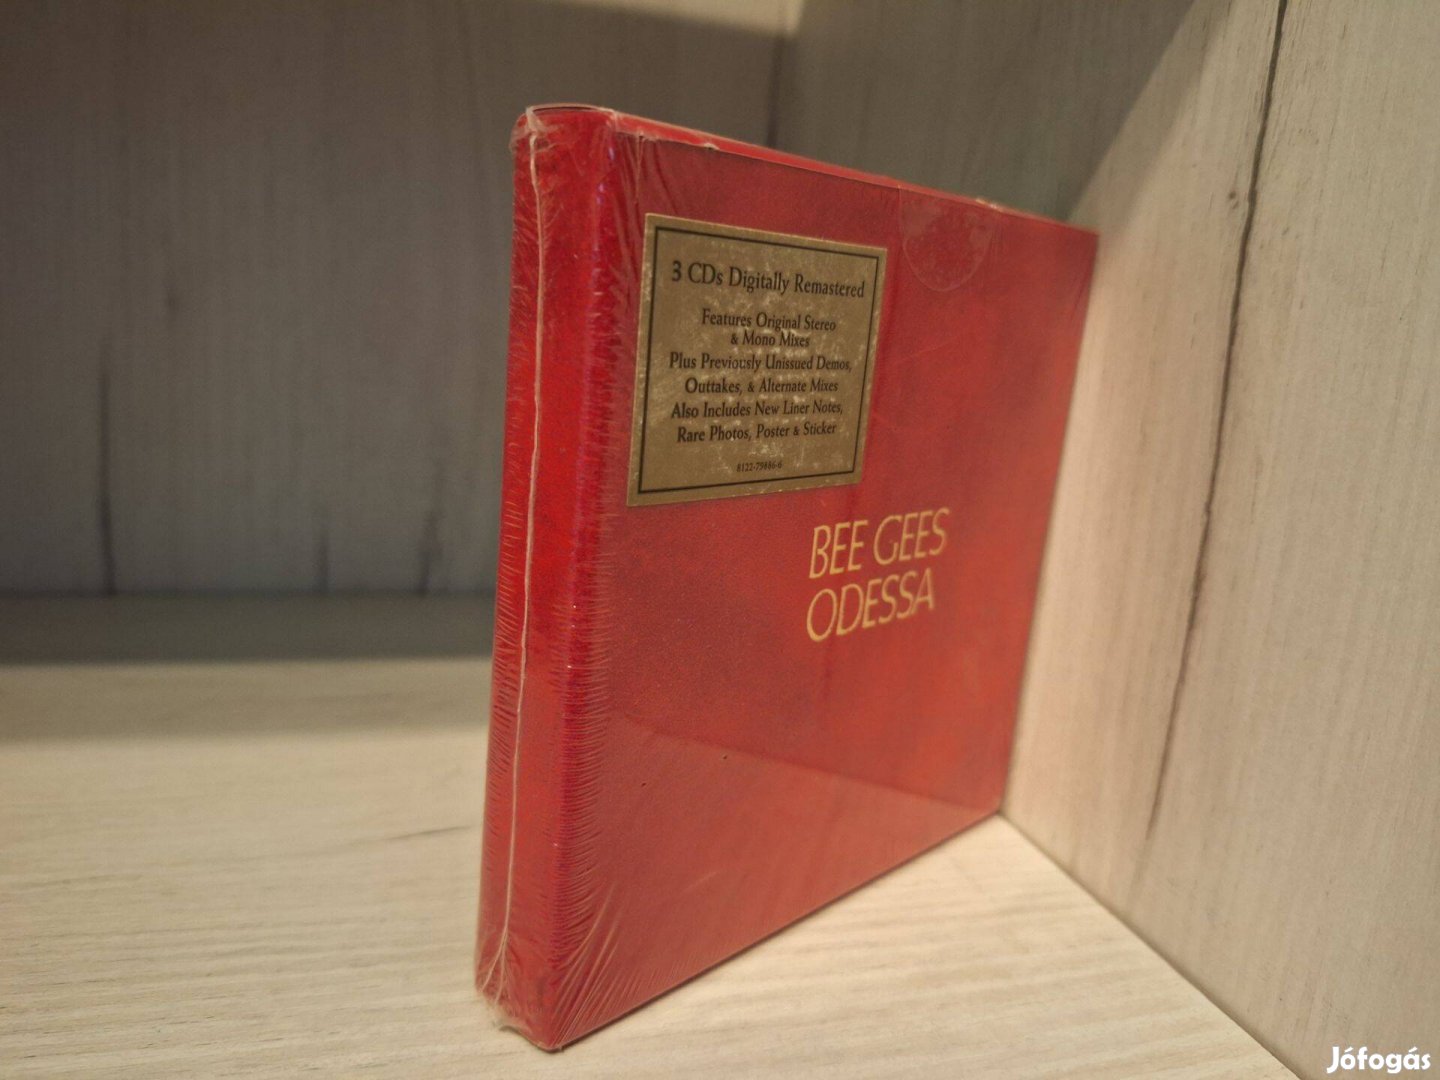 Bee Gees - Odessa - 3 CD box - Új